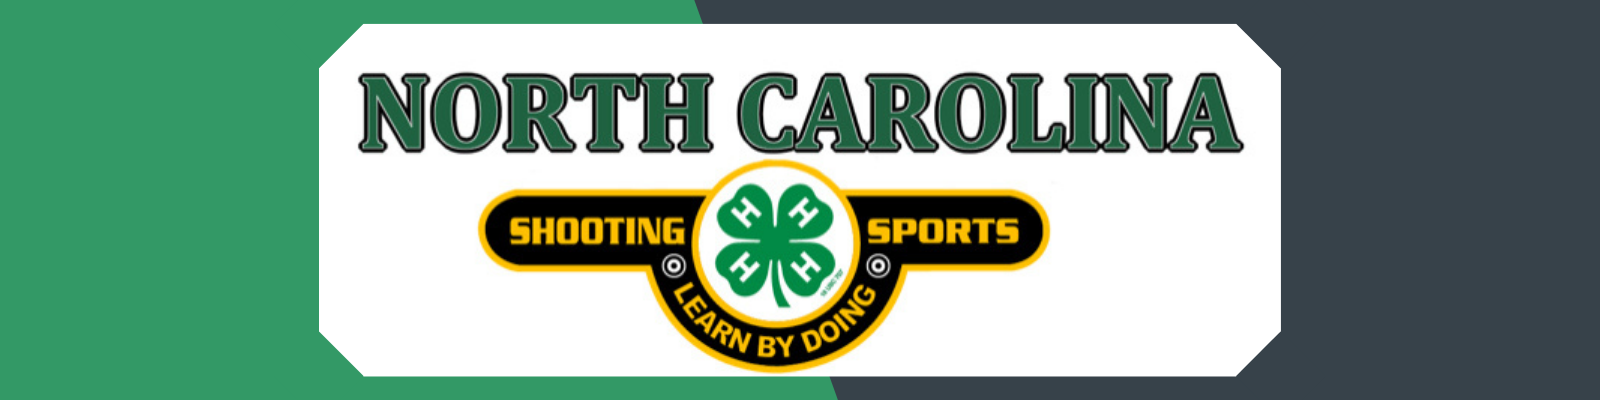 North Carolina Shooting Sports, 4-H Logo.